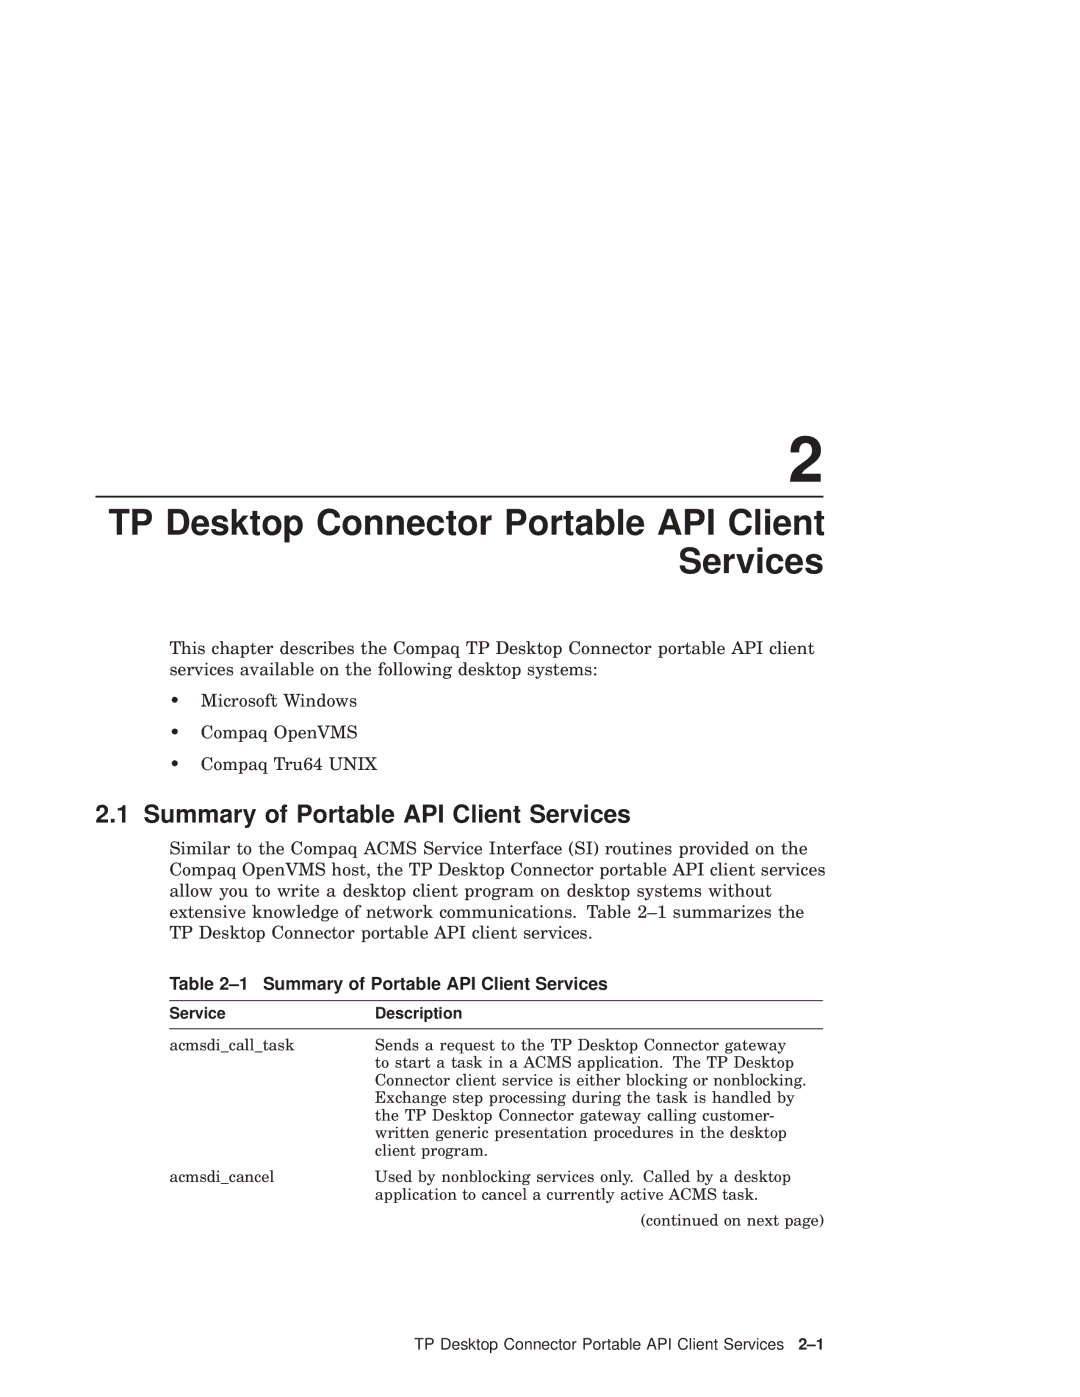 Compaq AAPVNFGTE manual Summary of Portable API Client Services, Service Description 